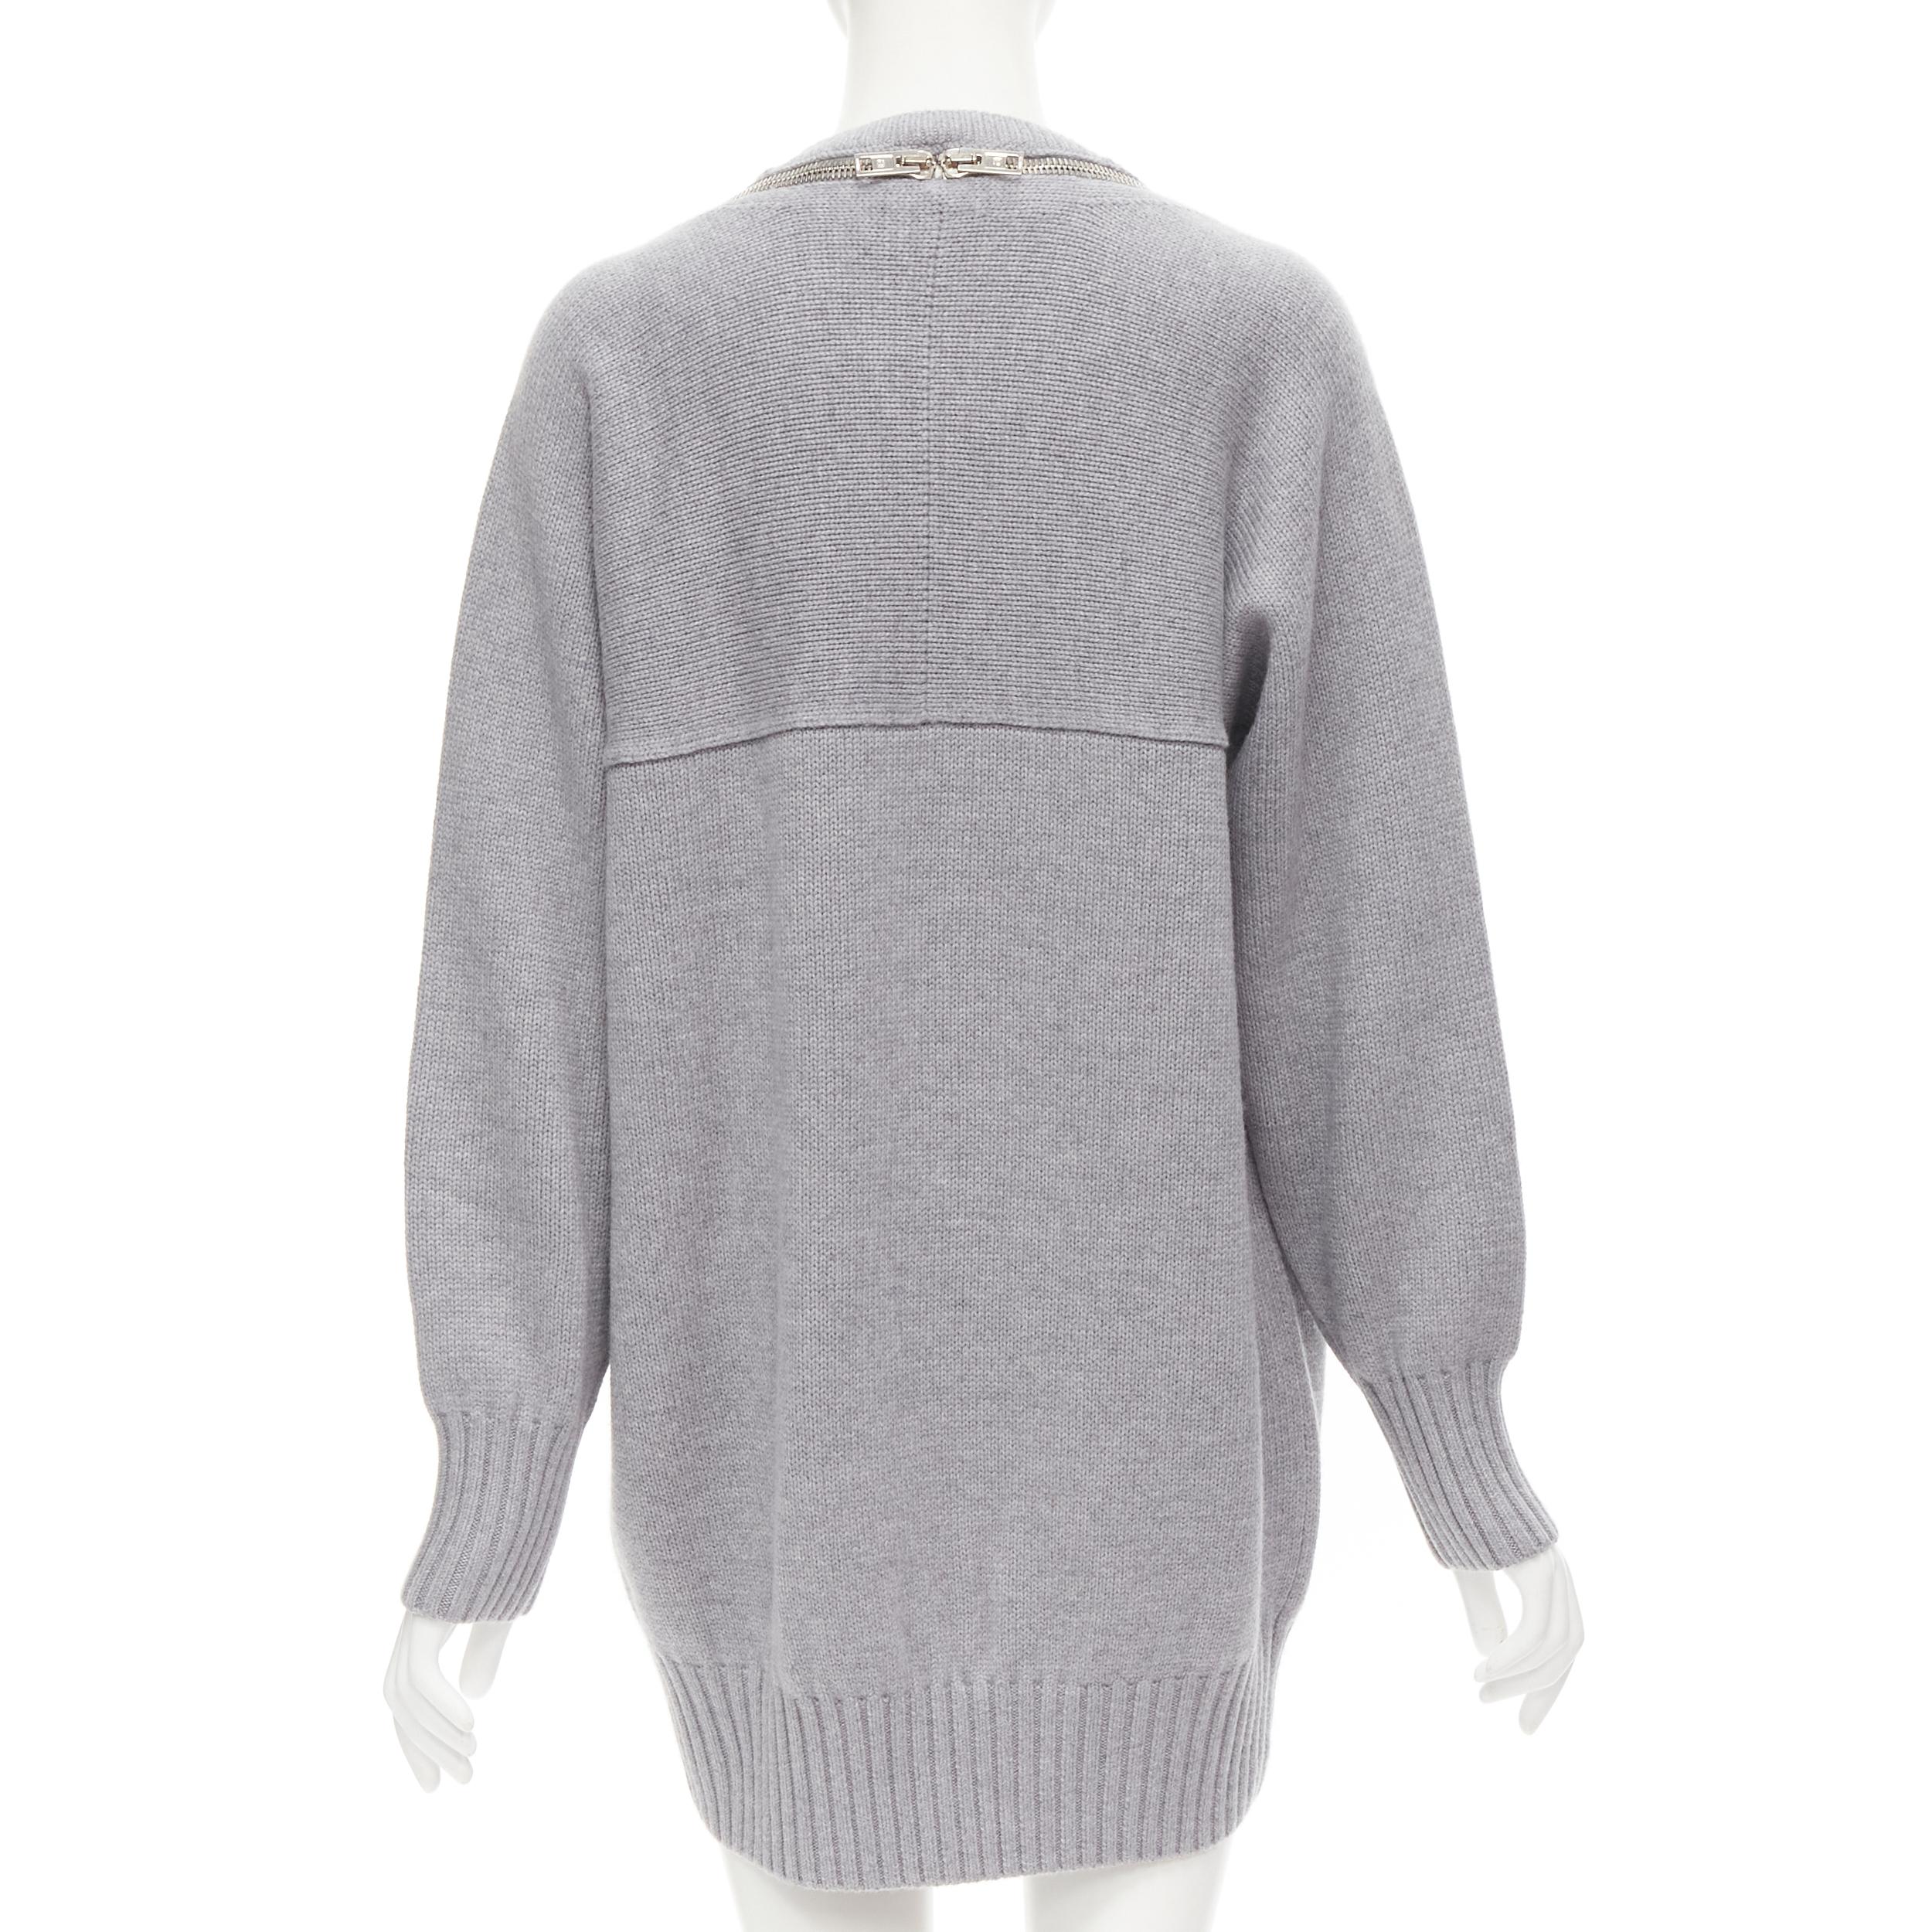 ALEXANDER WANG grey merino wool chunky knit zip trim sweater dress M 2